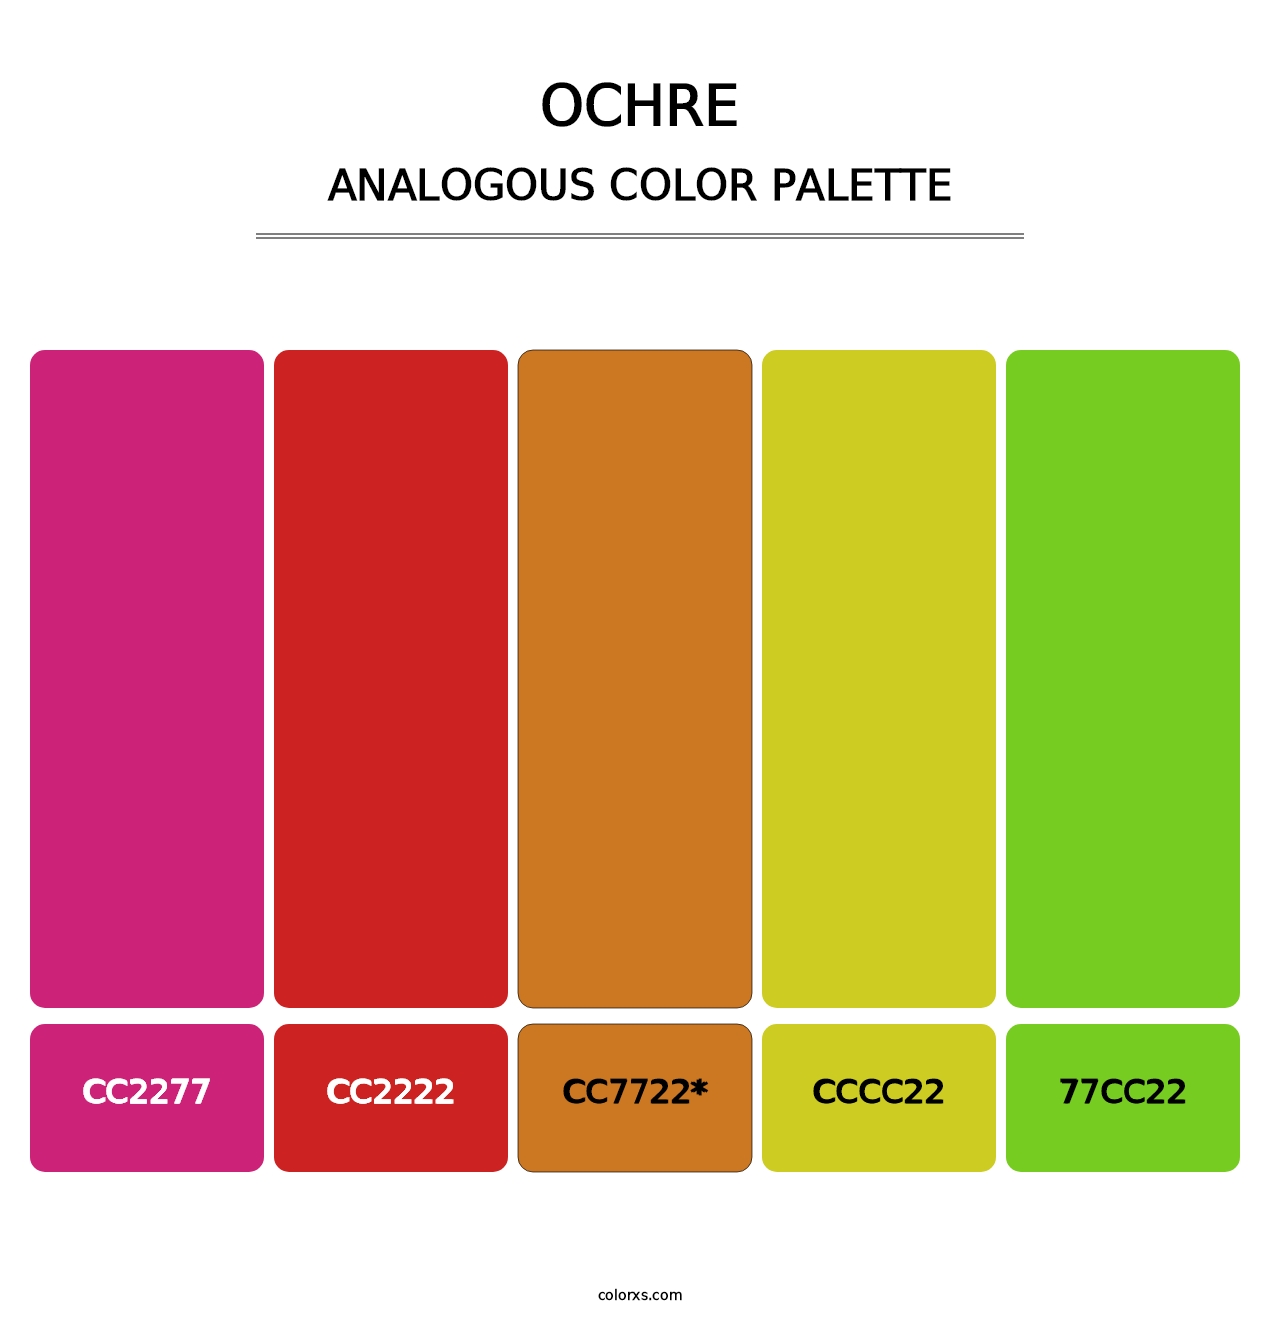 Ochre - Analogous Color Palette